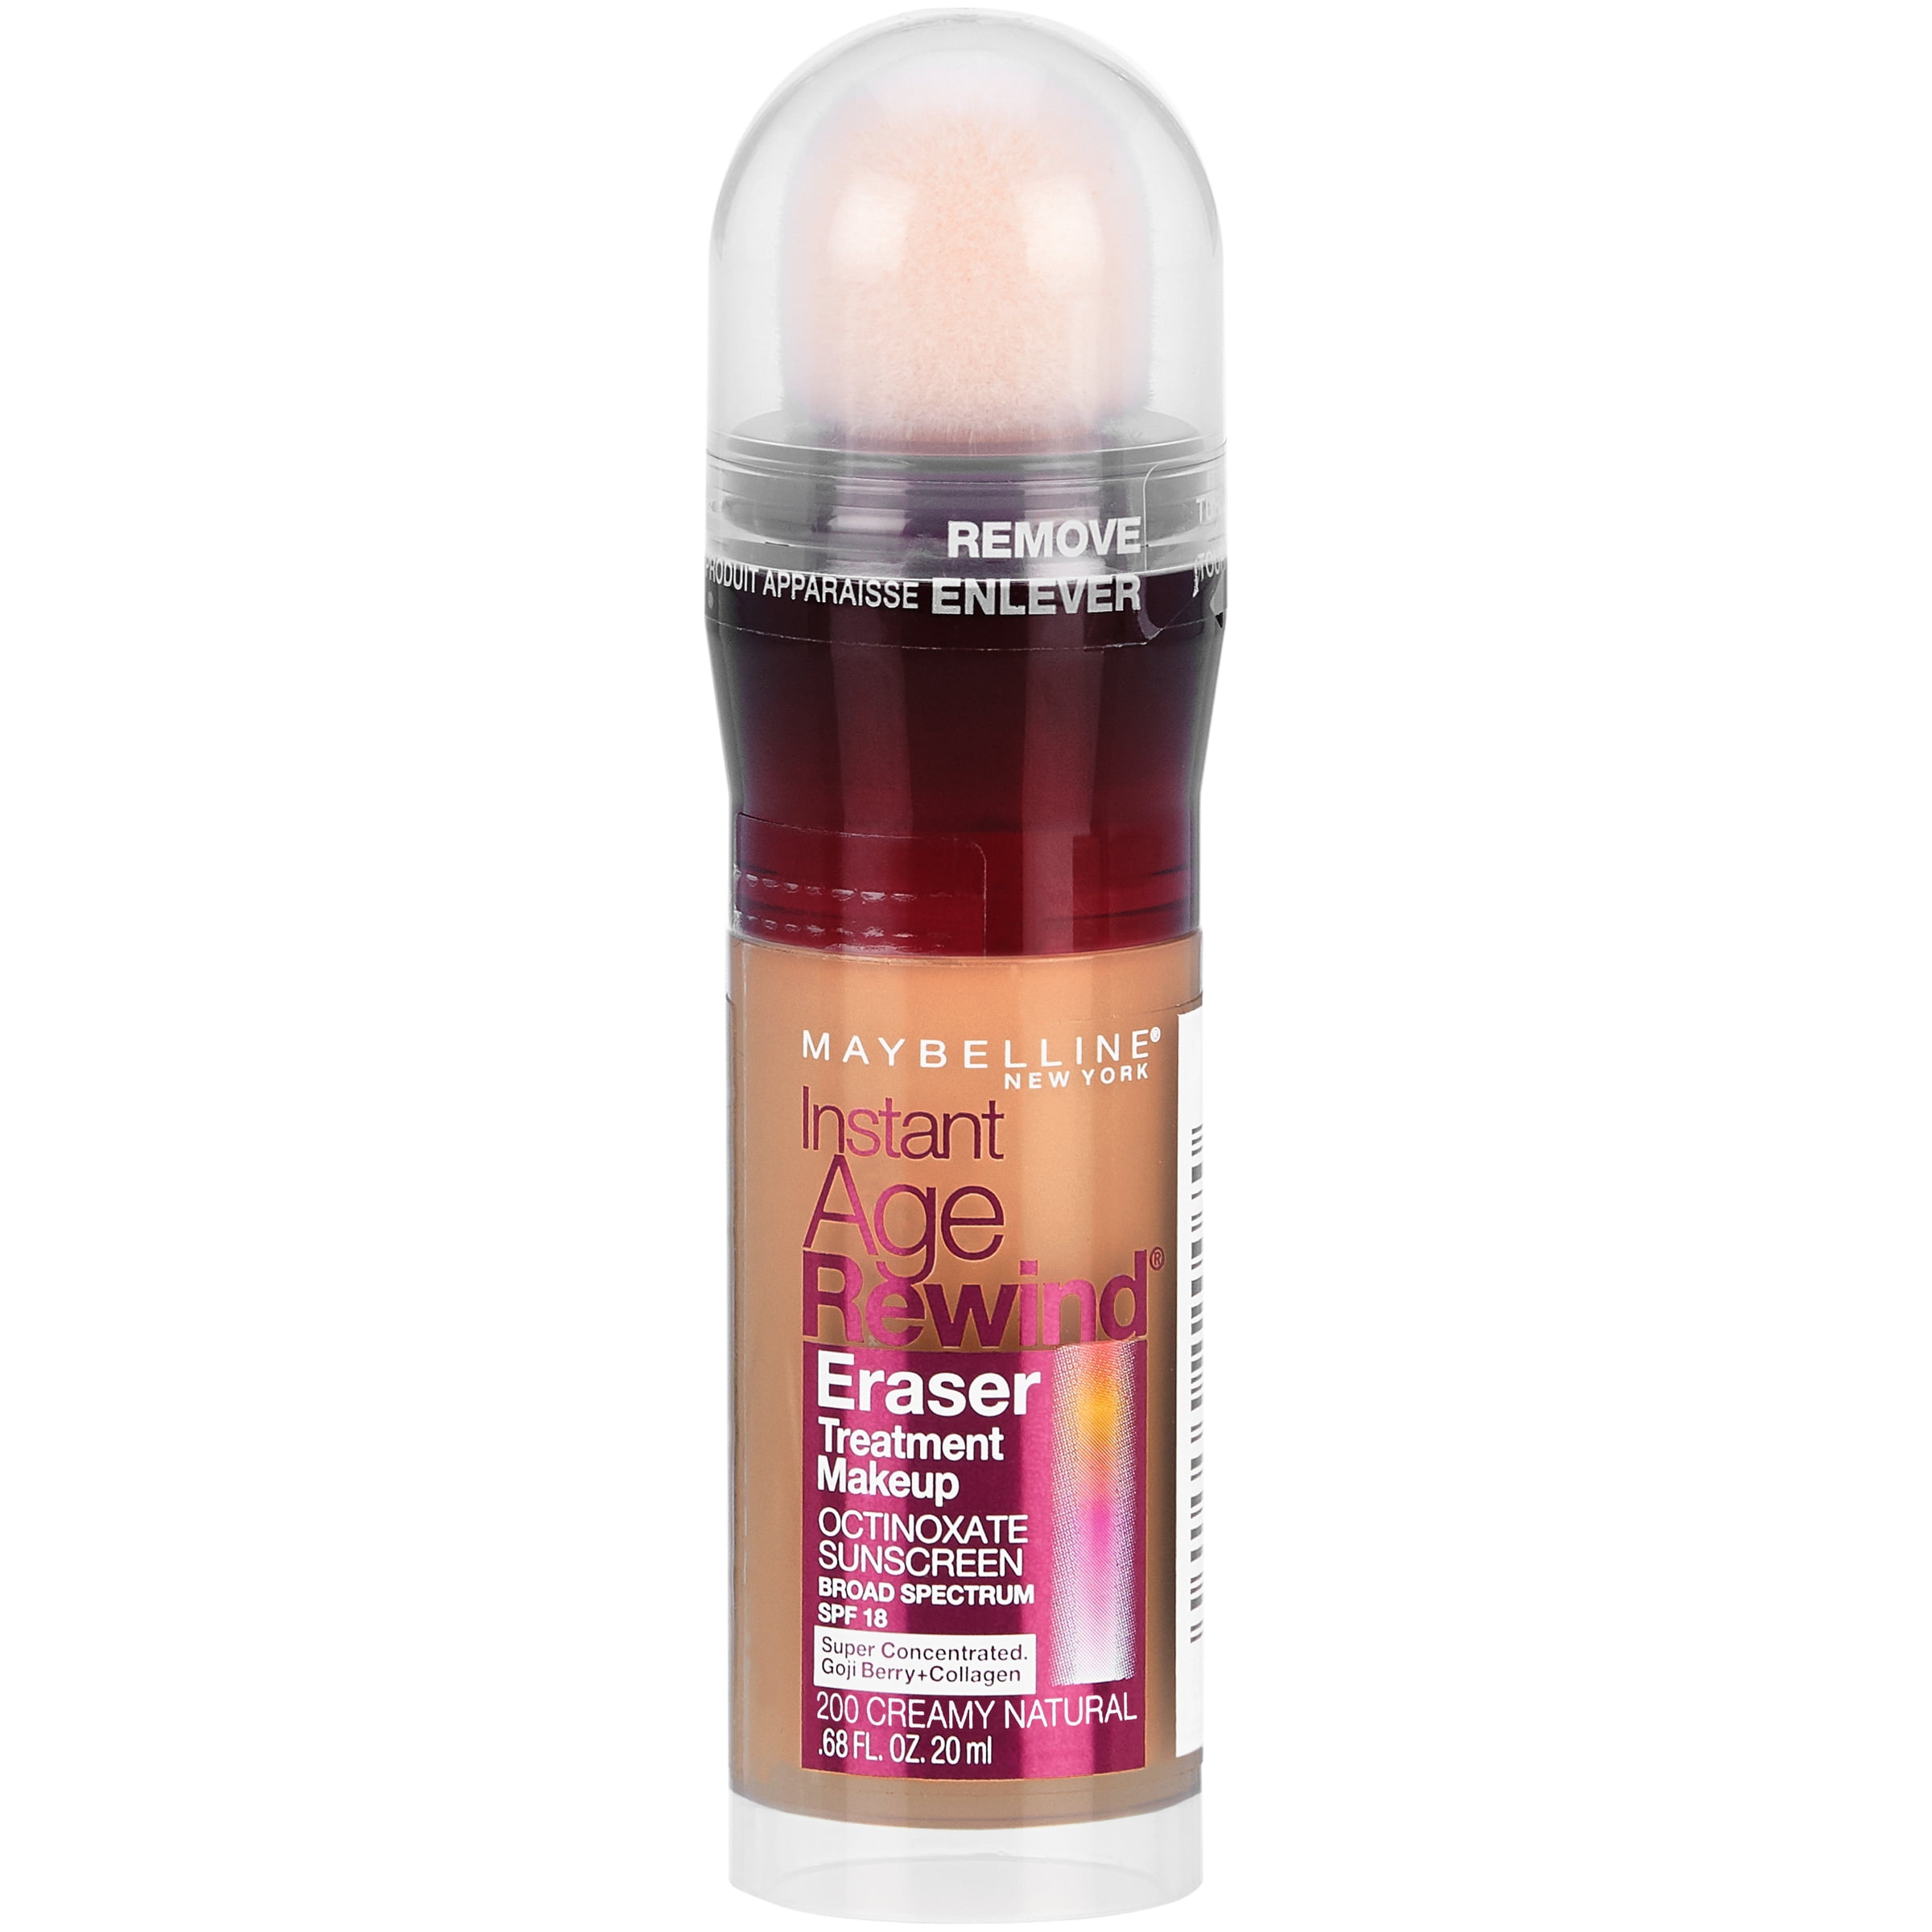 Maybelline Instant Age Rewind Eraser Treatment Makeup, SPF 18, Creamy Natural, 0.68 fl oz